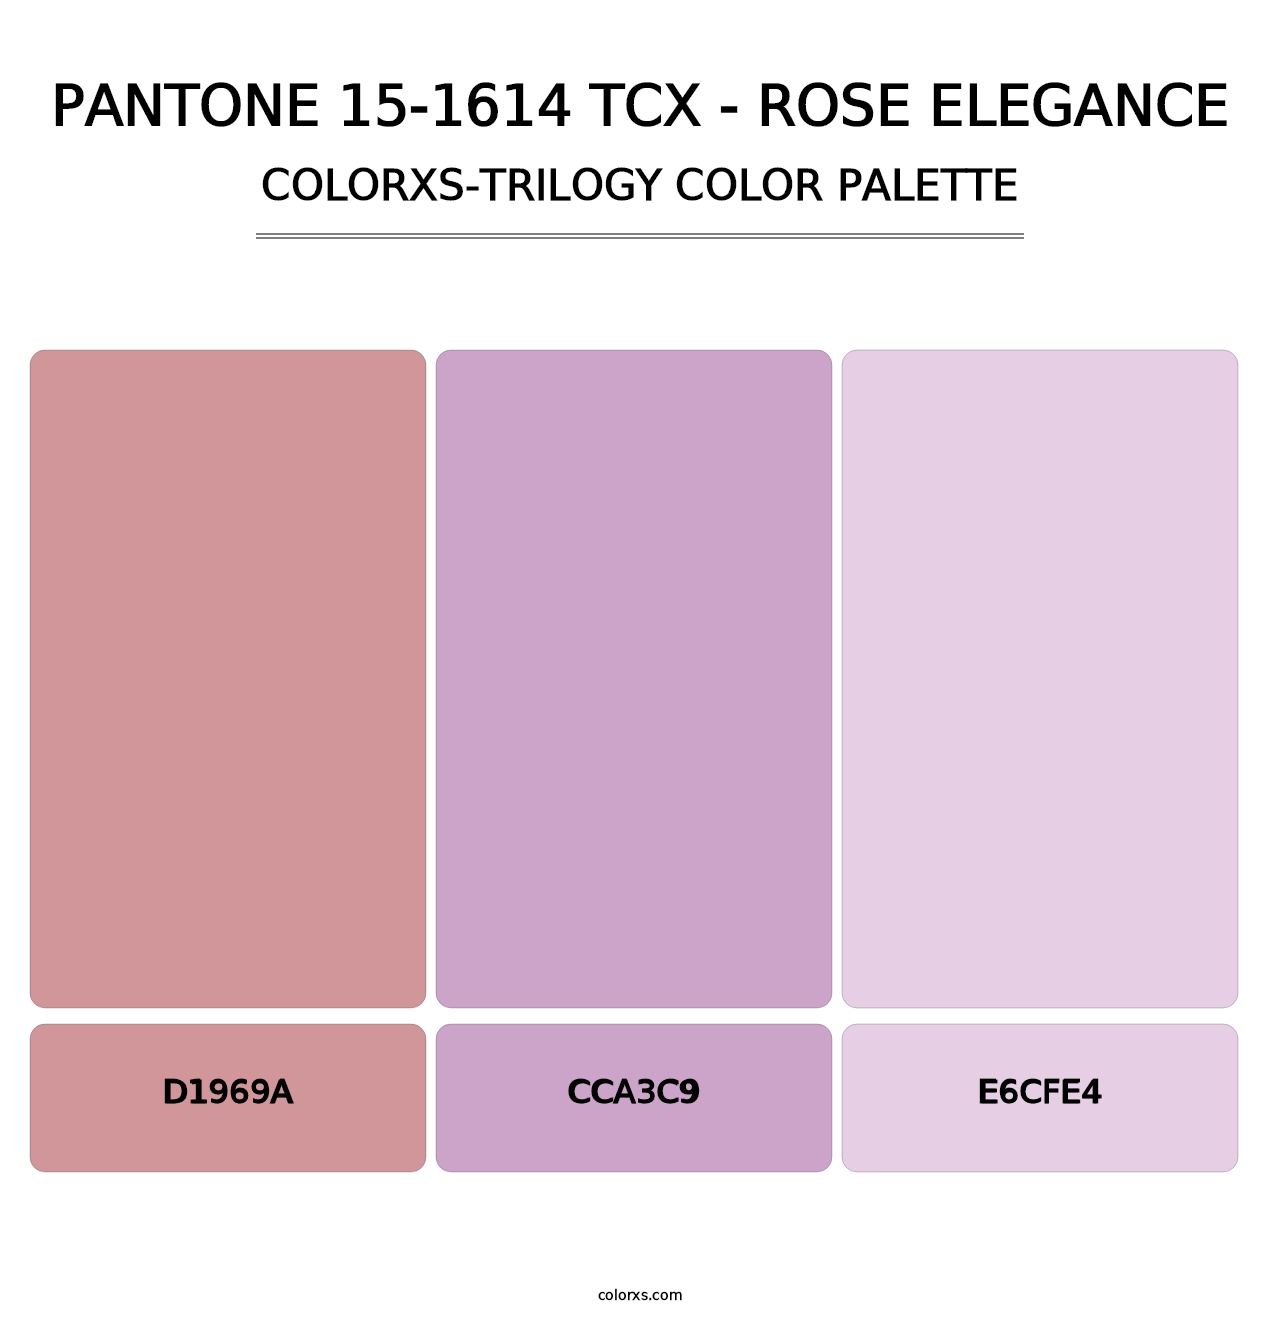 PANTONE 15-1614 TCX - Rose Elegance - Colorxs Trilogy Palette